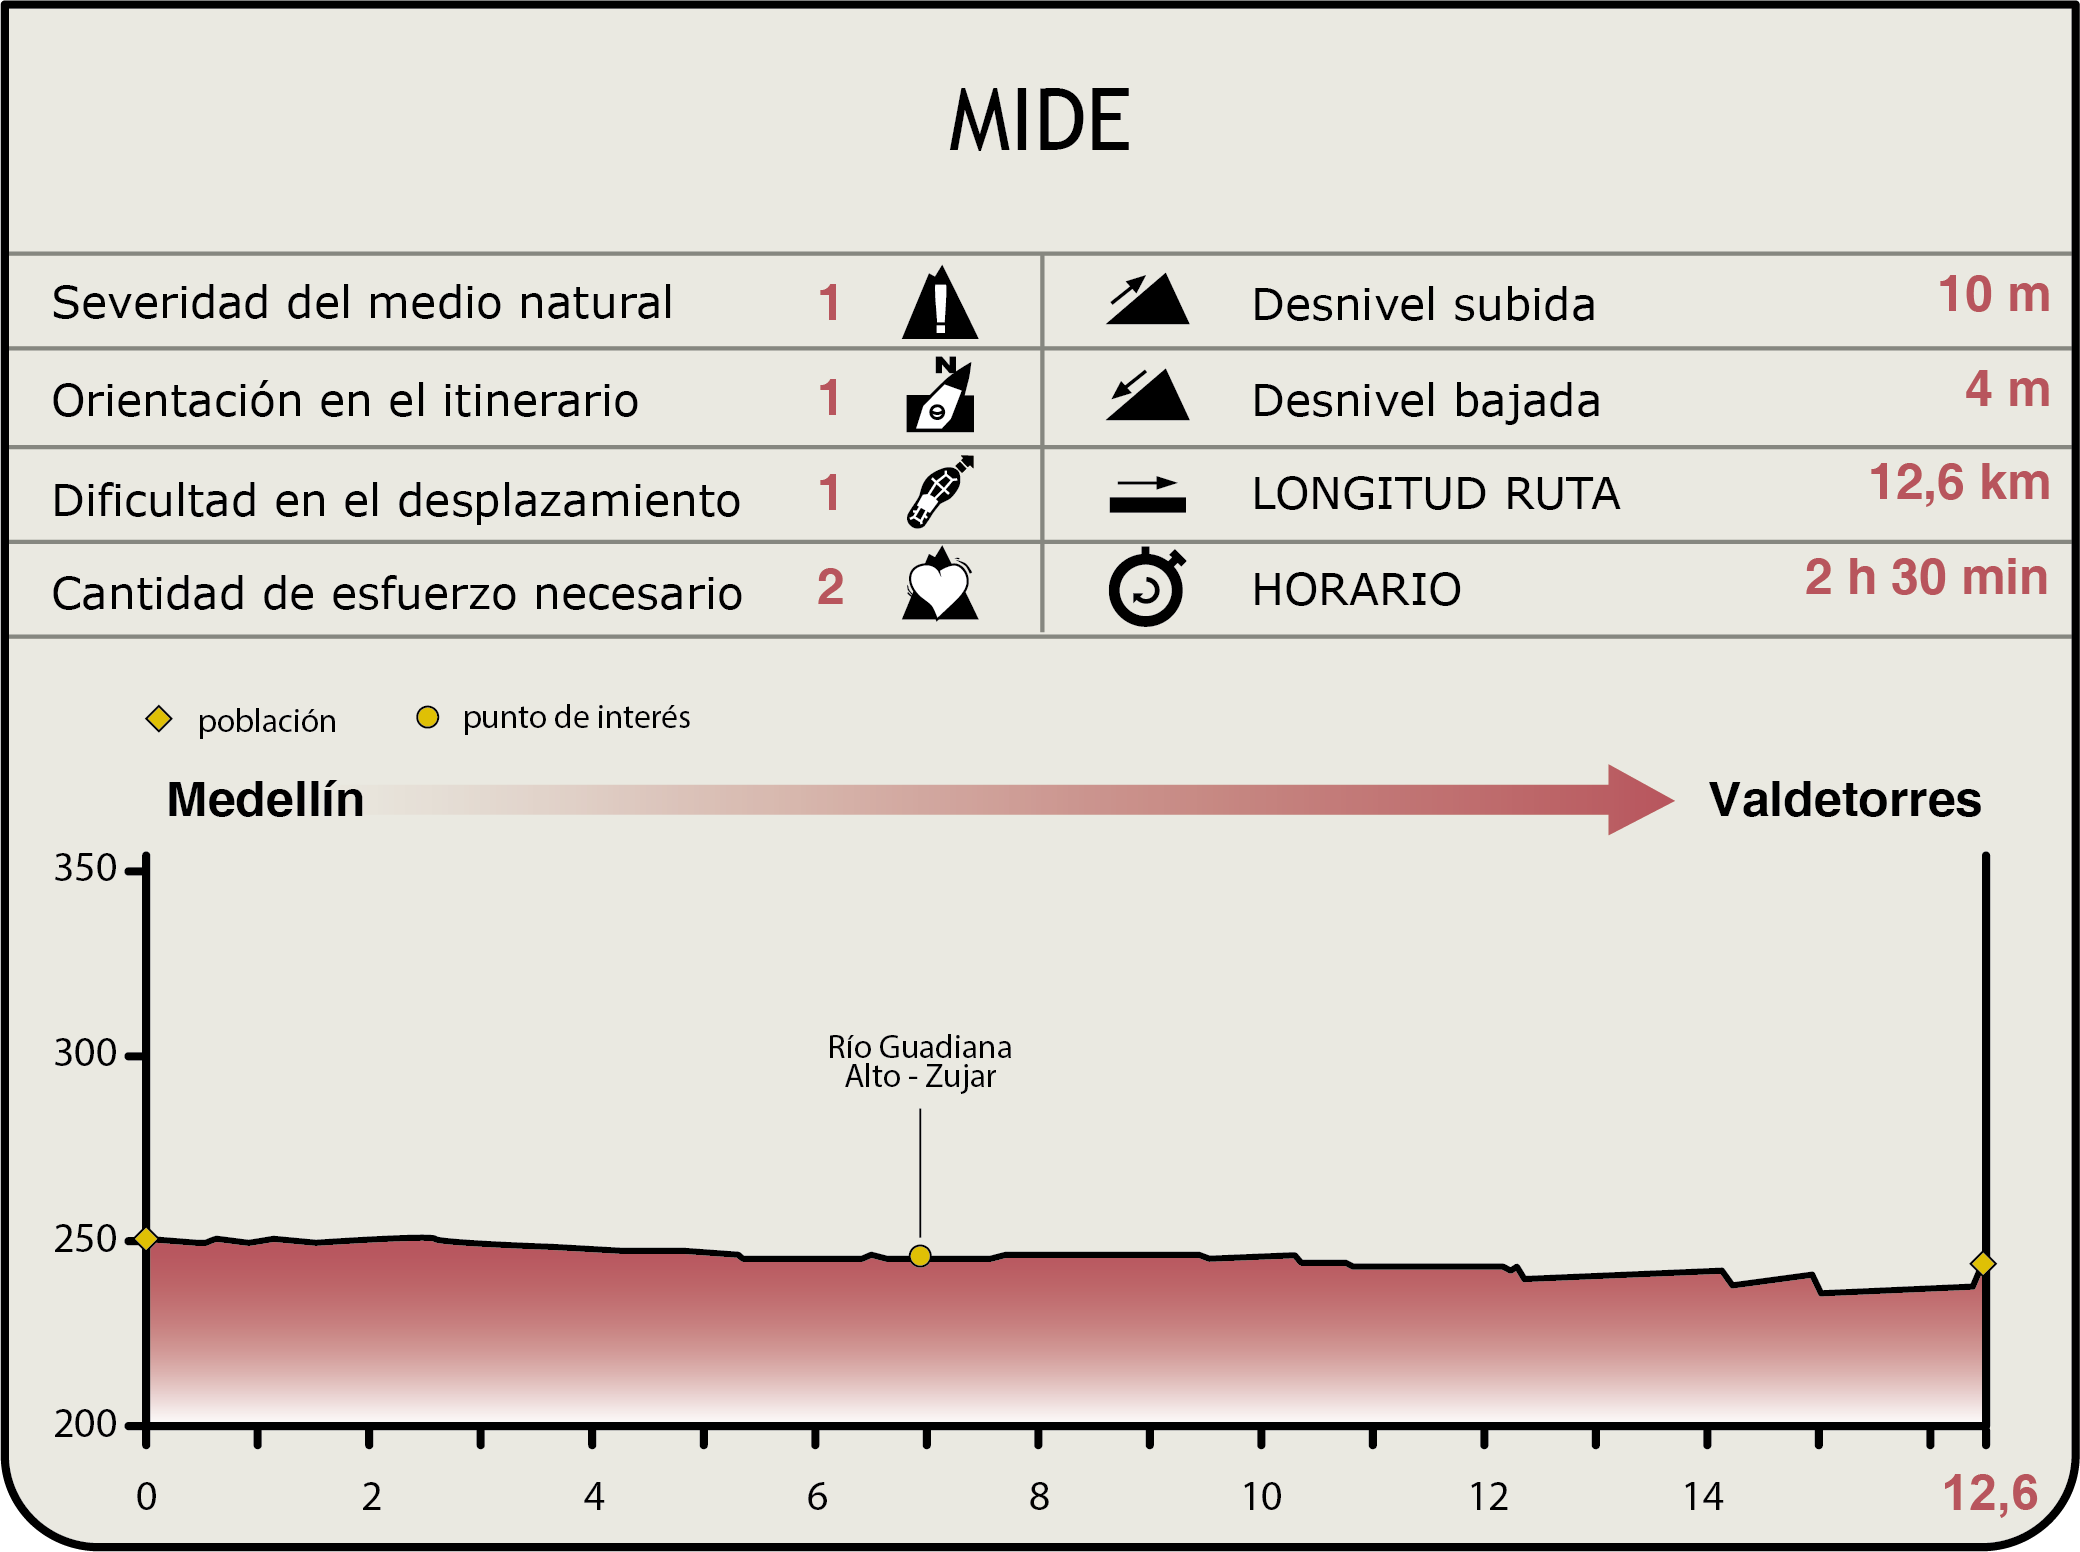 Perfil MIDE de la Etapa Medellín-Valdetorres